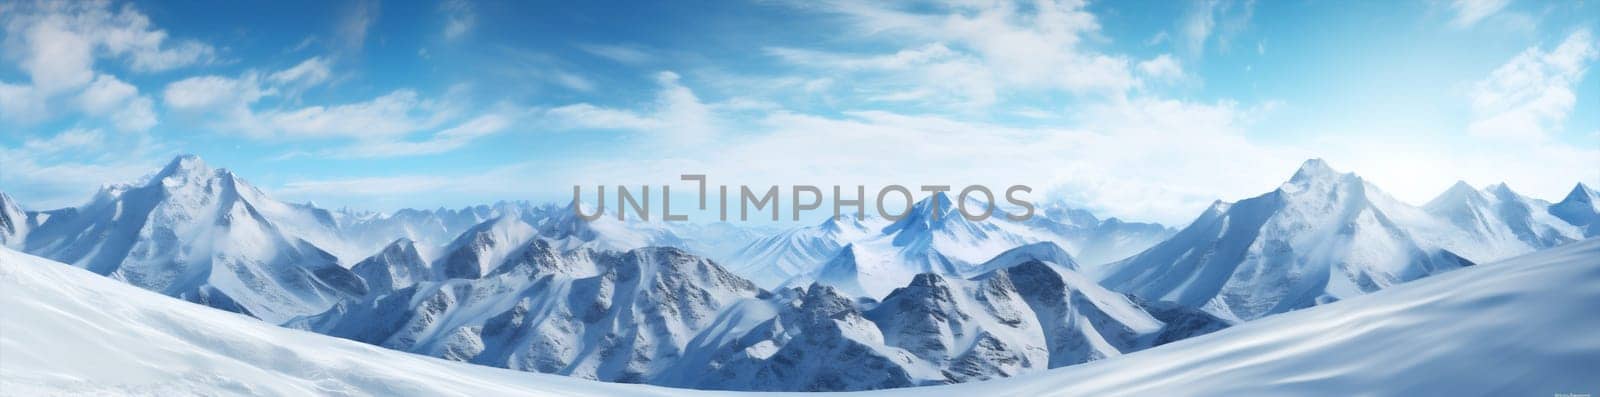 Winter snow nature mountain landscape by Vichizh